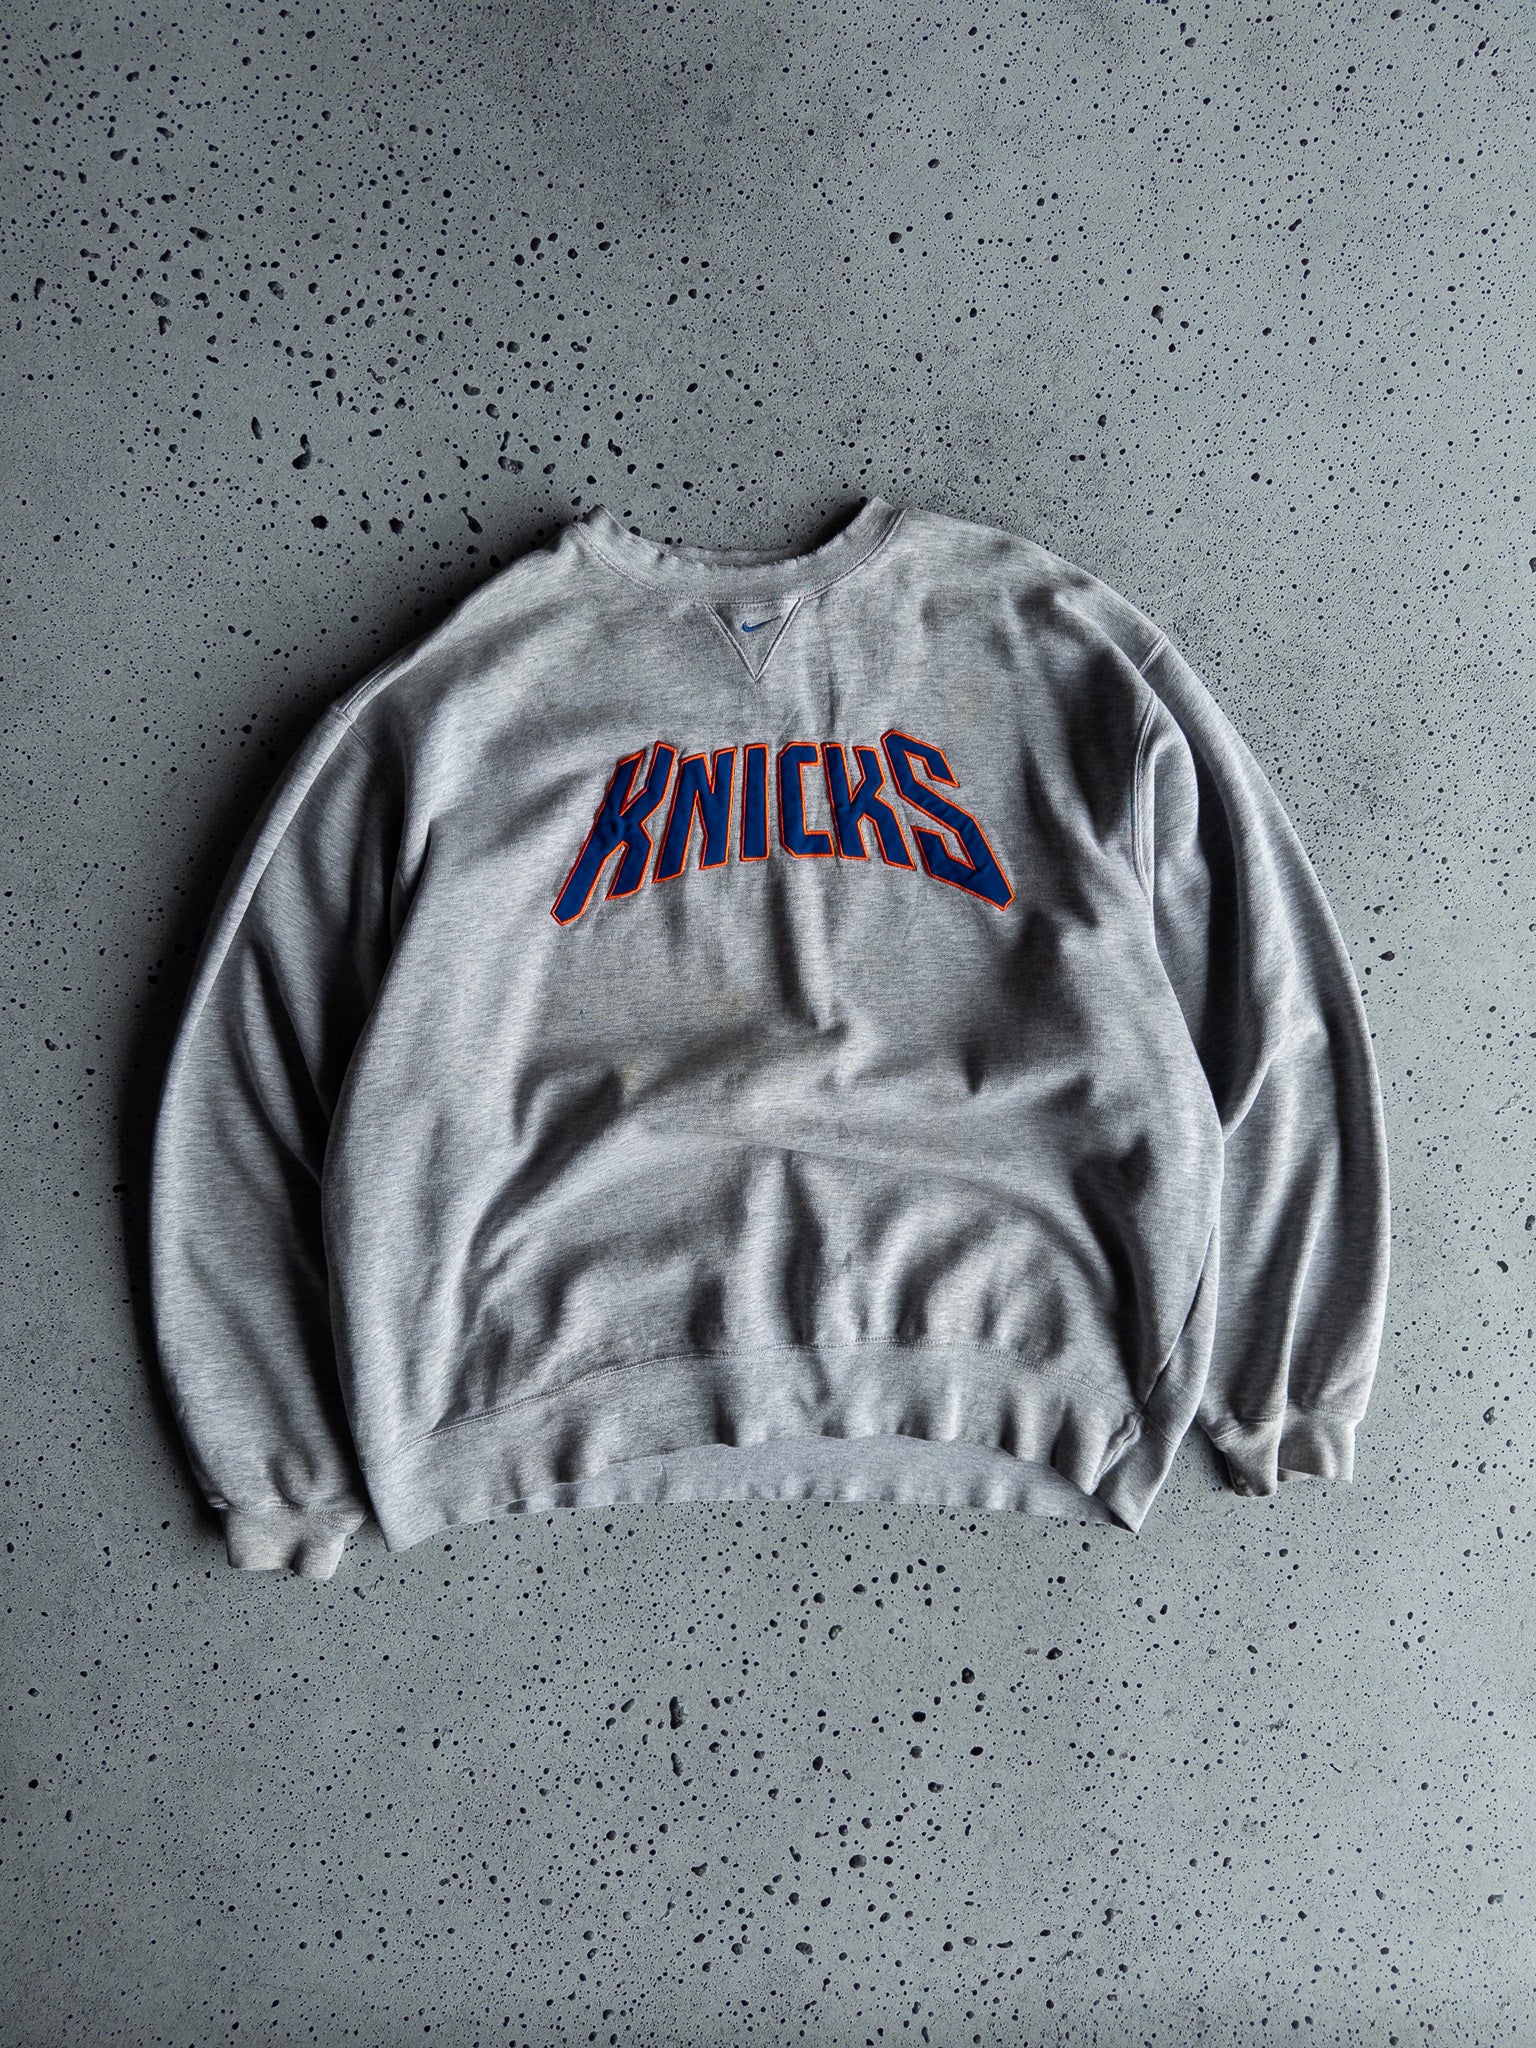 Vintage New York Knicks Nike Sweatshirt (XL)